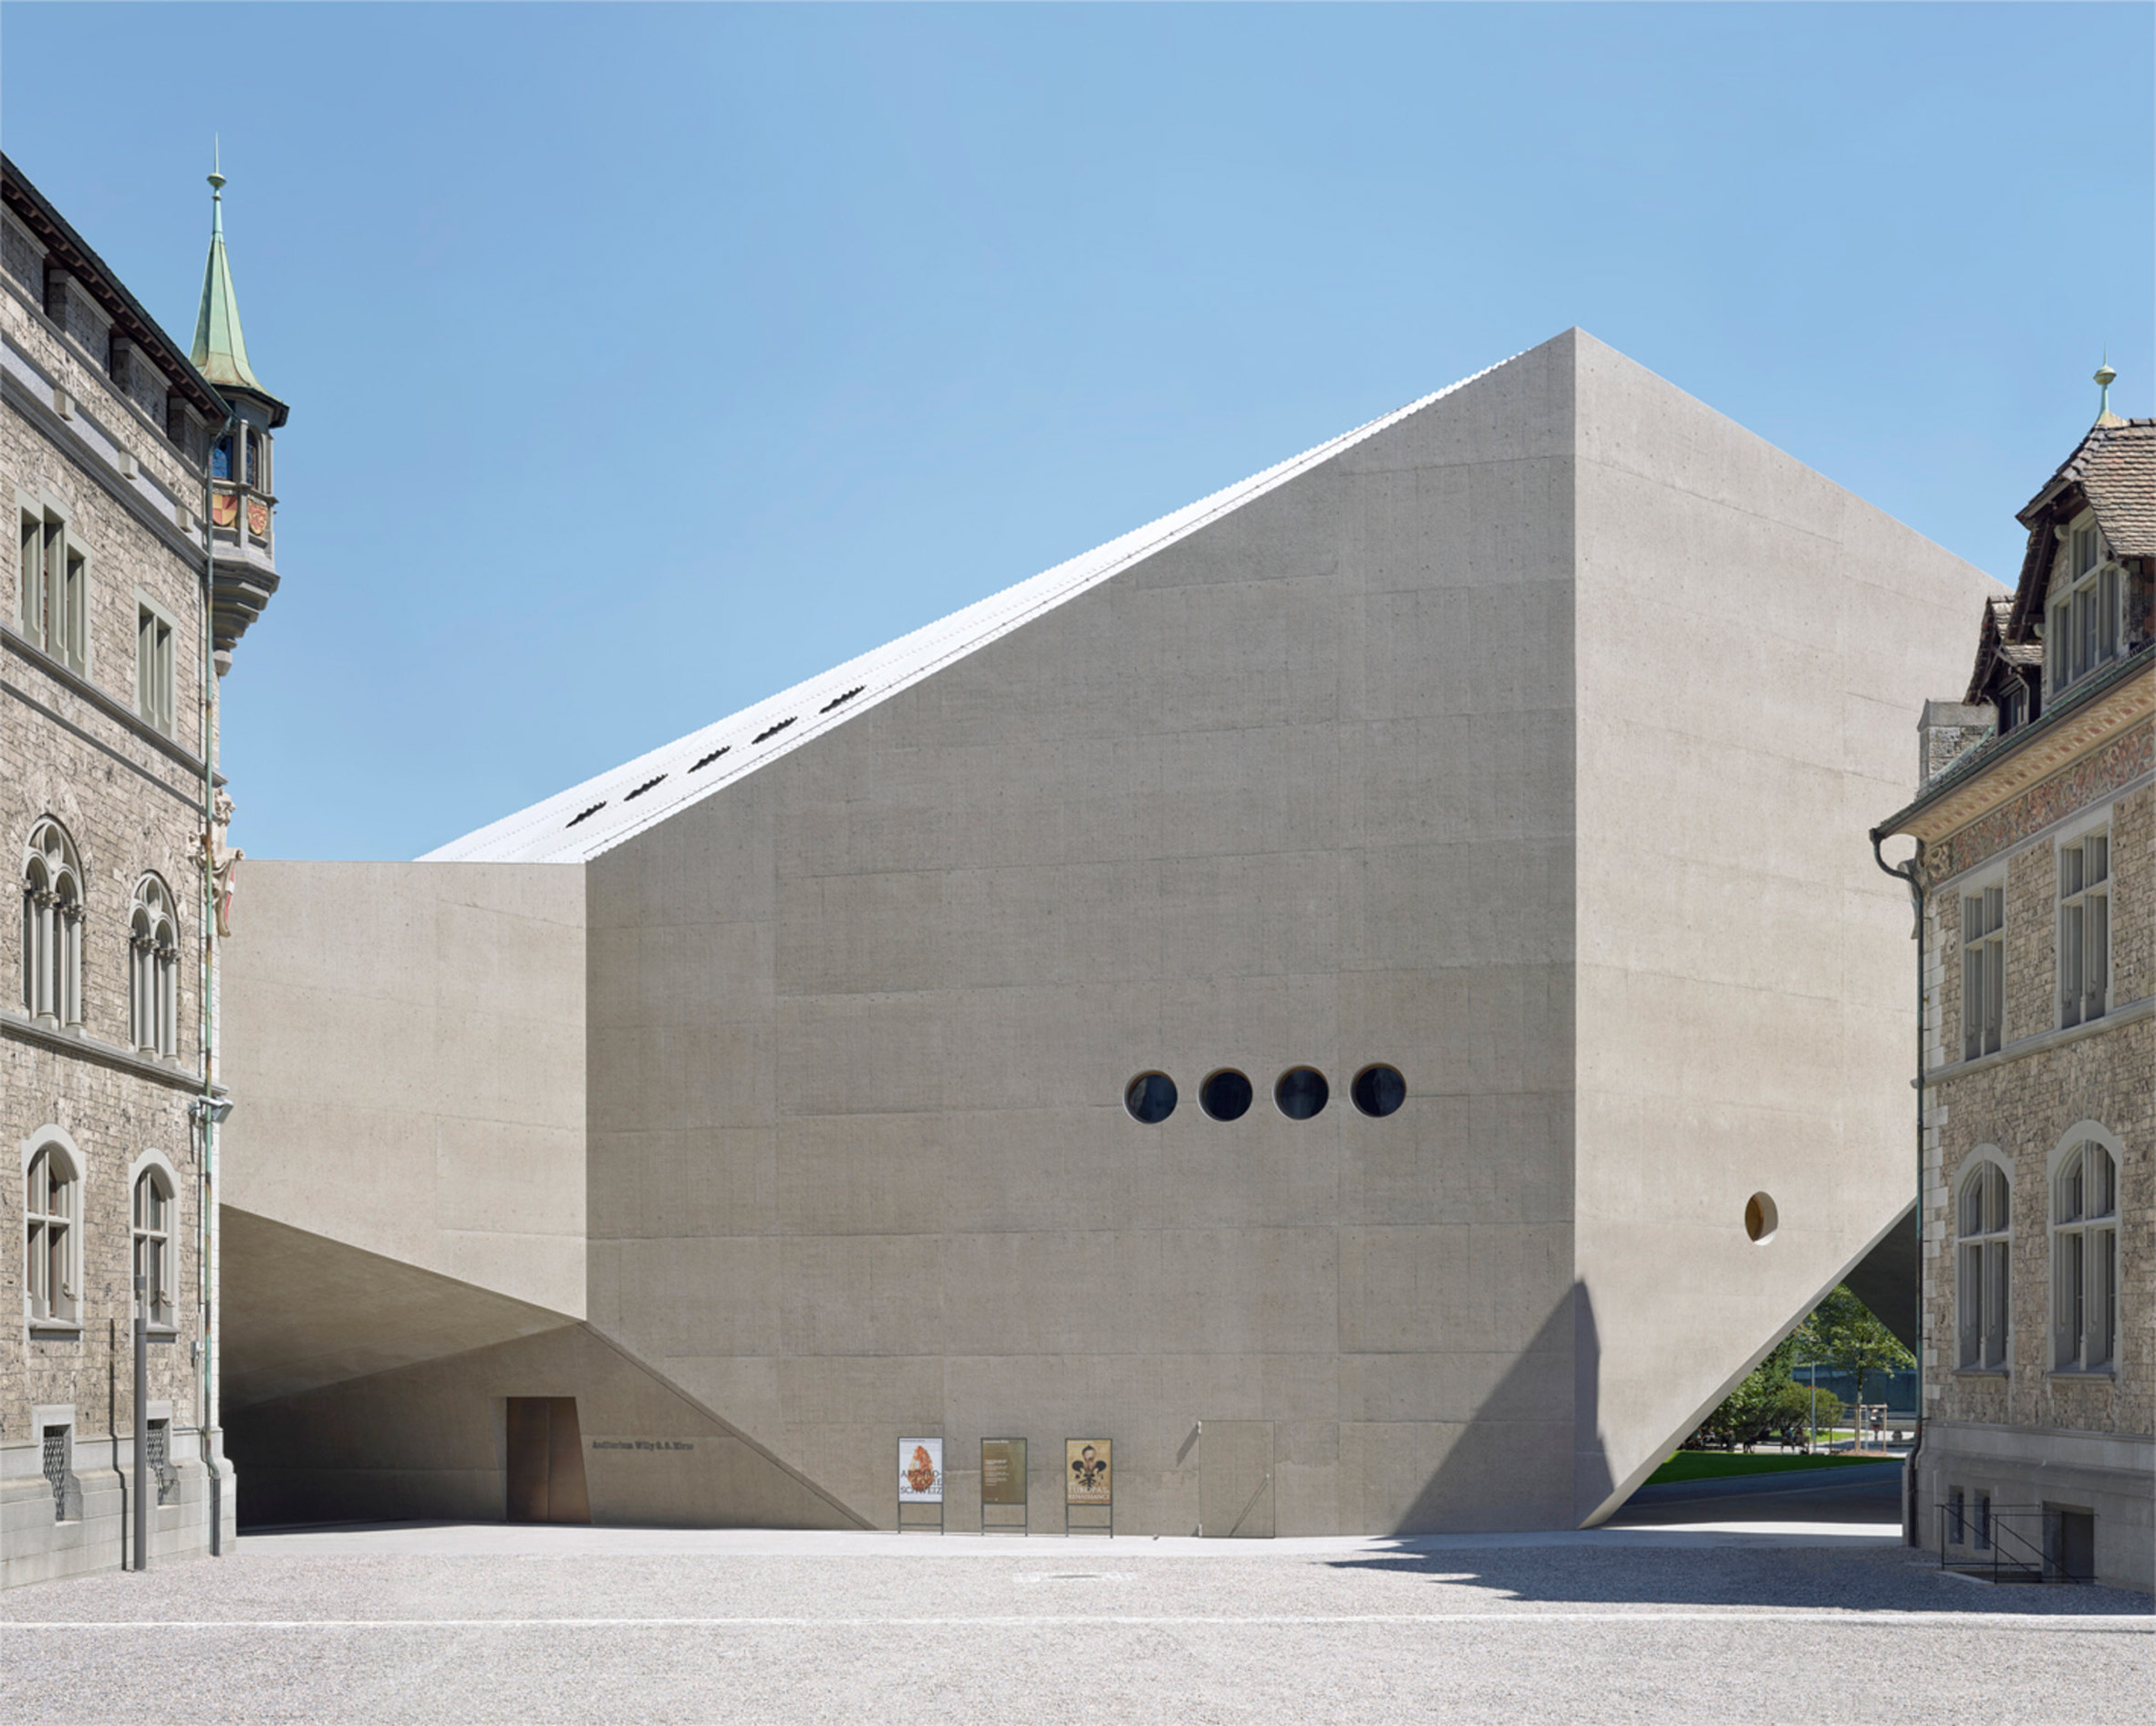 Christ & Gantenbein and Bureau Spectacular named best architecture studios at Dezeen Awards